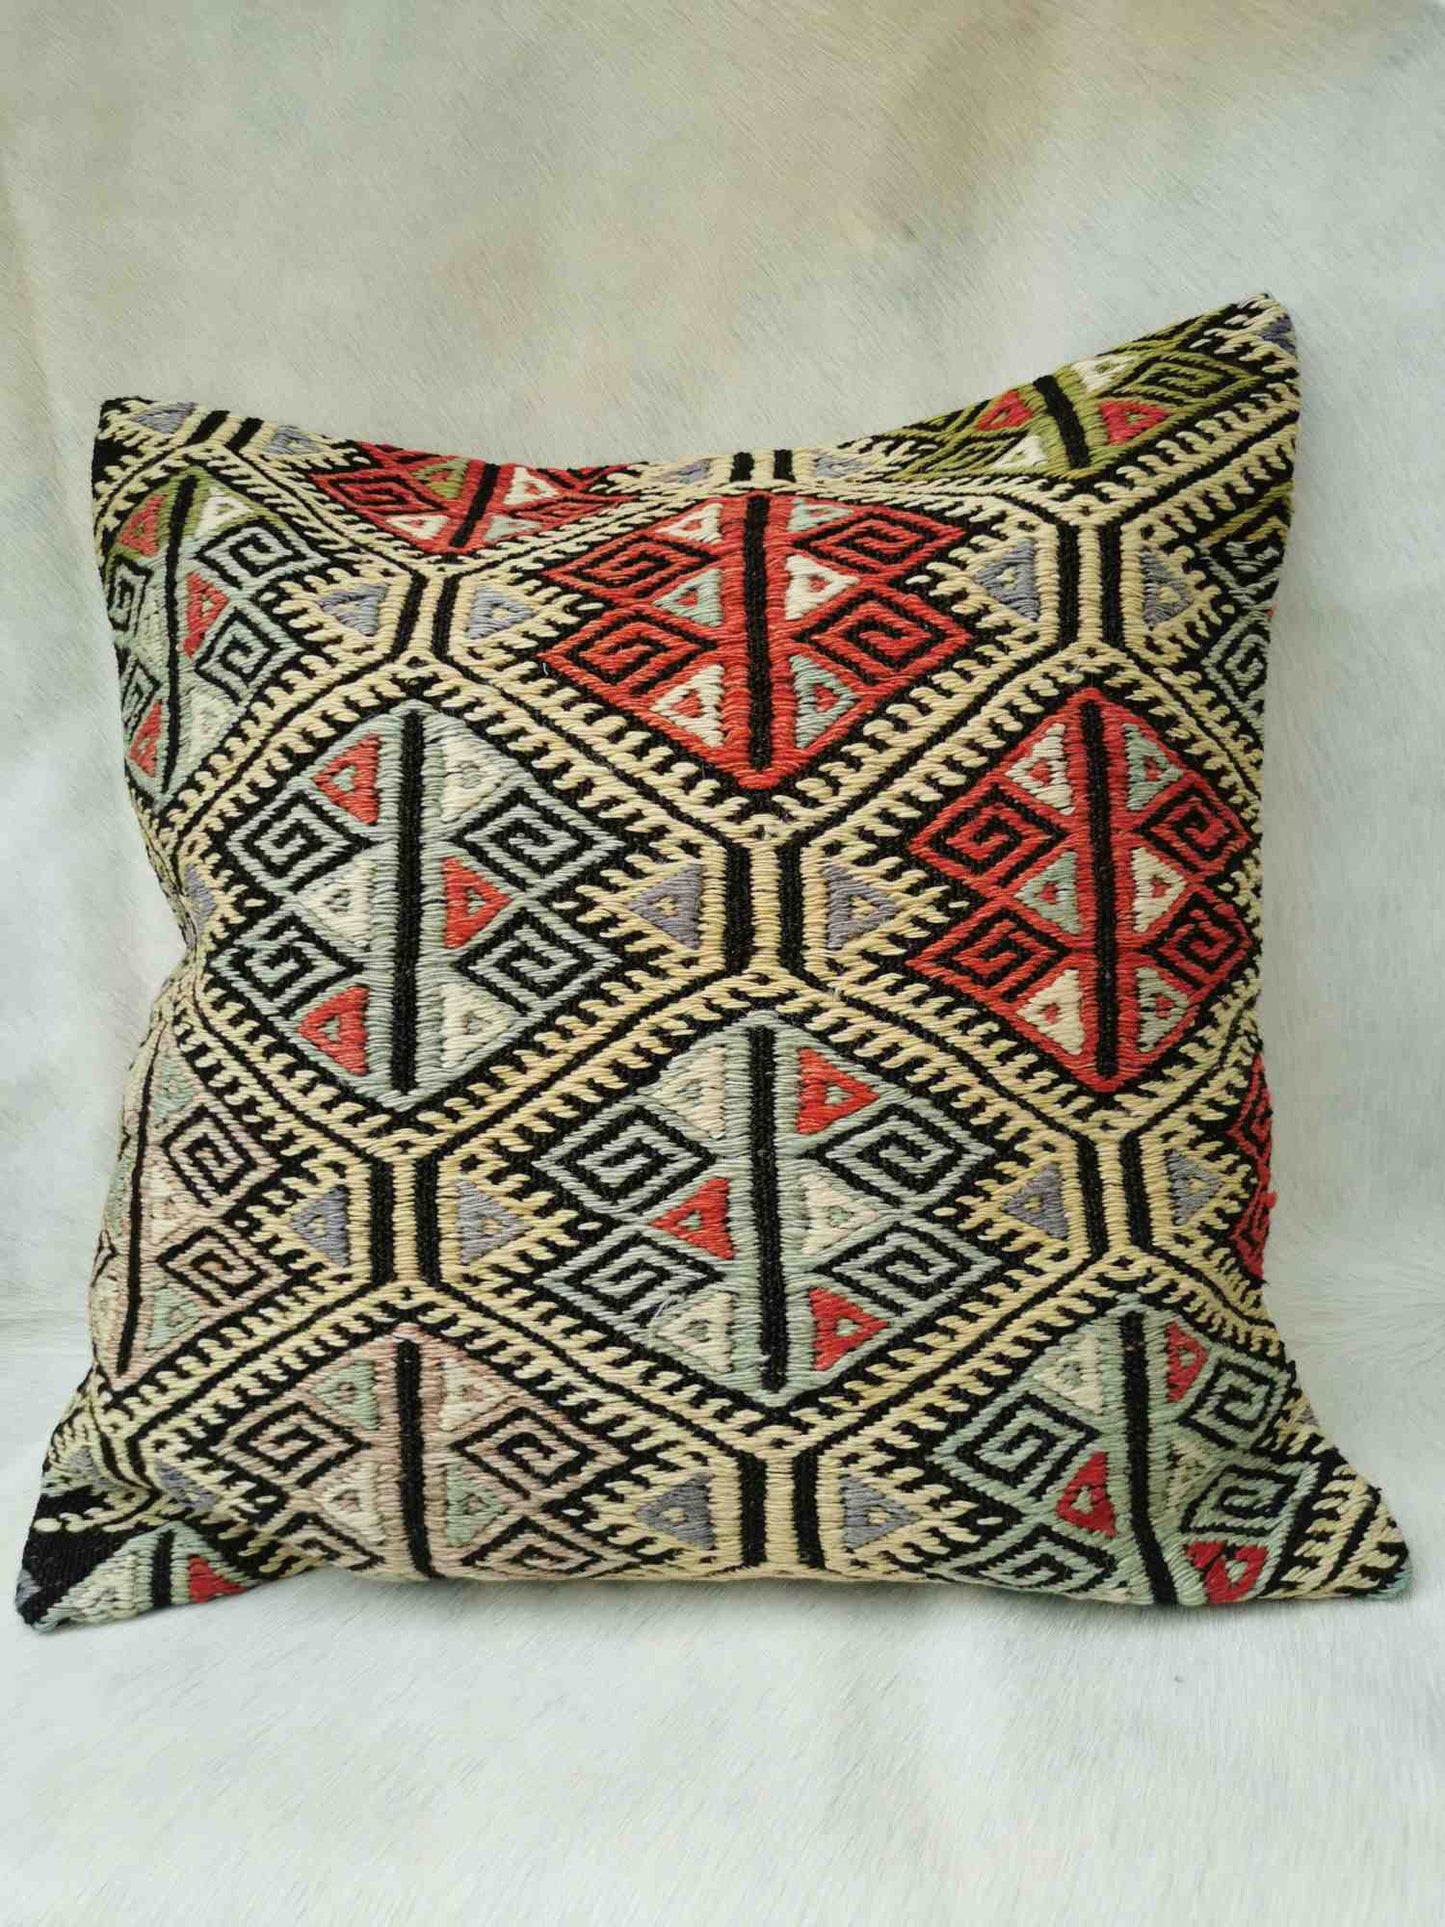 Kilim Pillow Cover Vintage, Bohemian Kilim Rugs Pillow Case, Decorative Square Kilim Sofa Cushion Case, Boho Vintage Home Decor